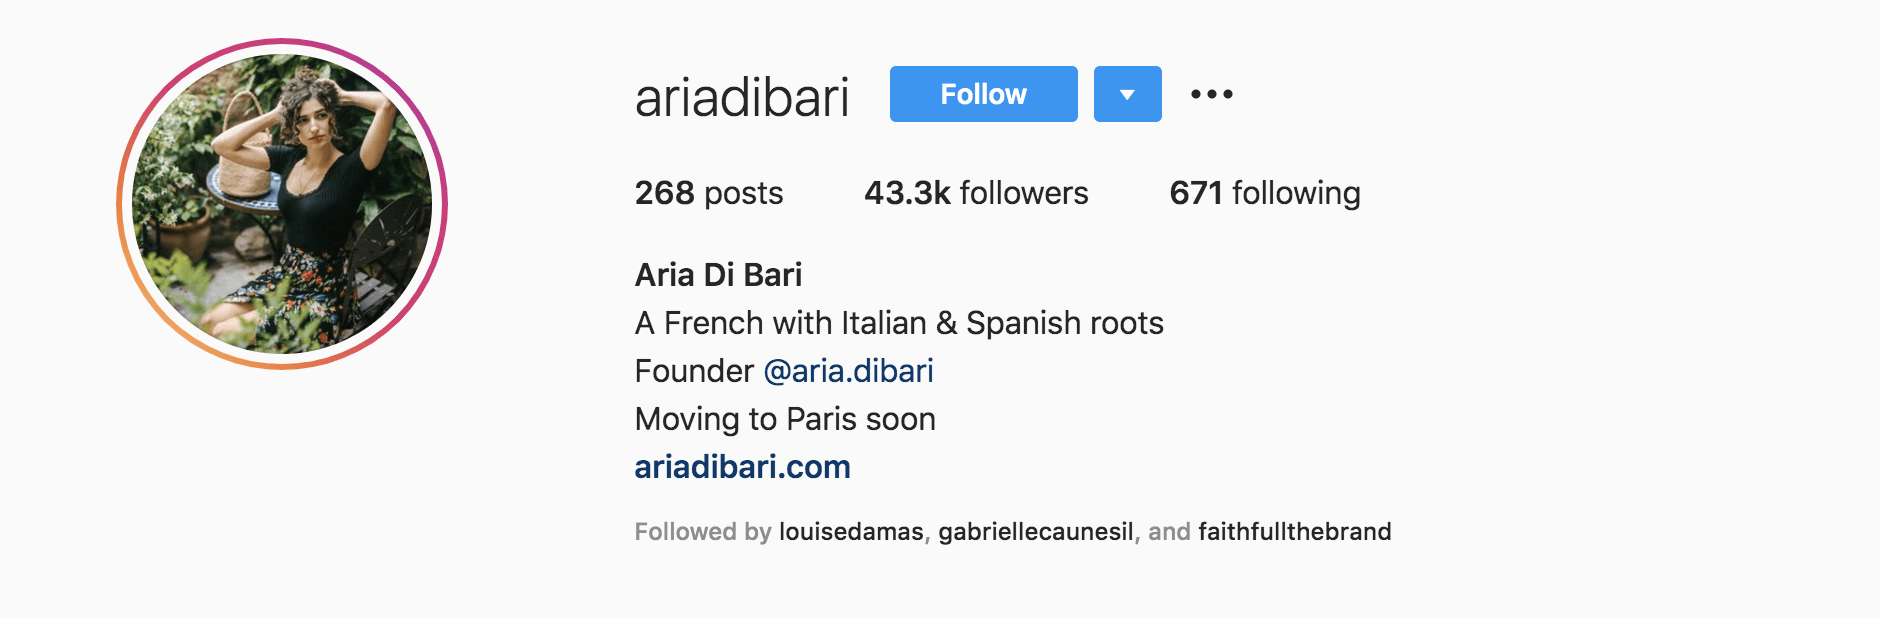 Top Fashion Influencers - Aria Di Bari